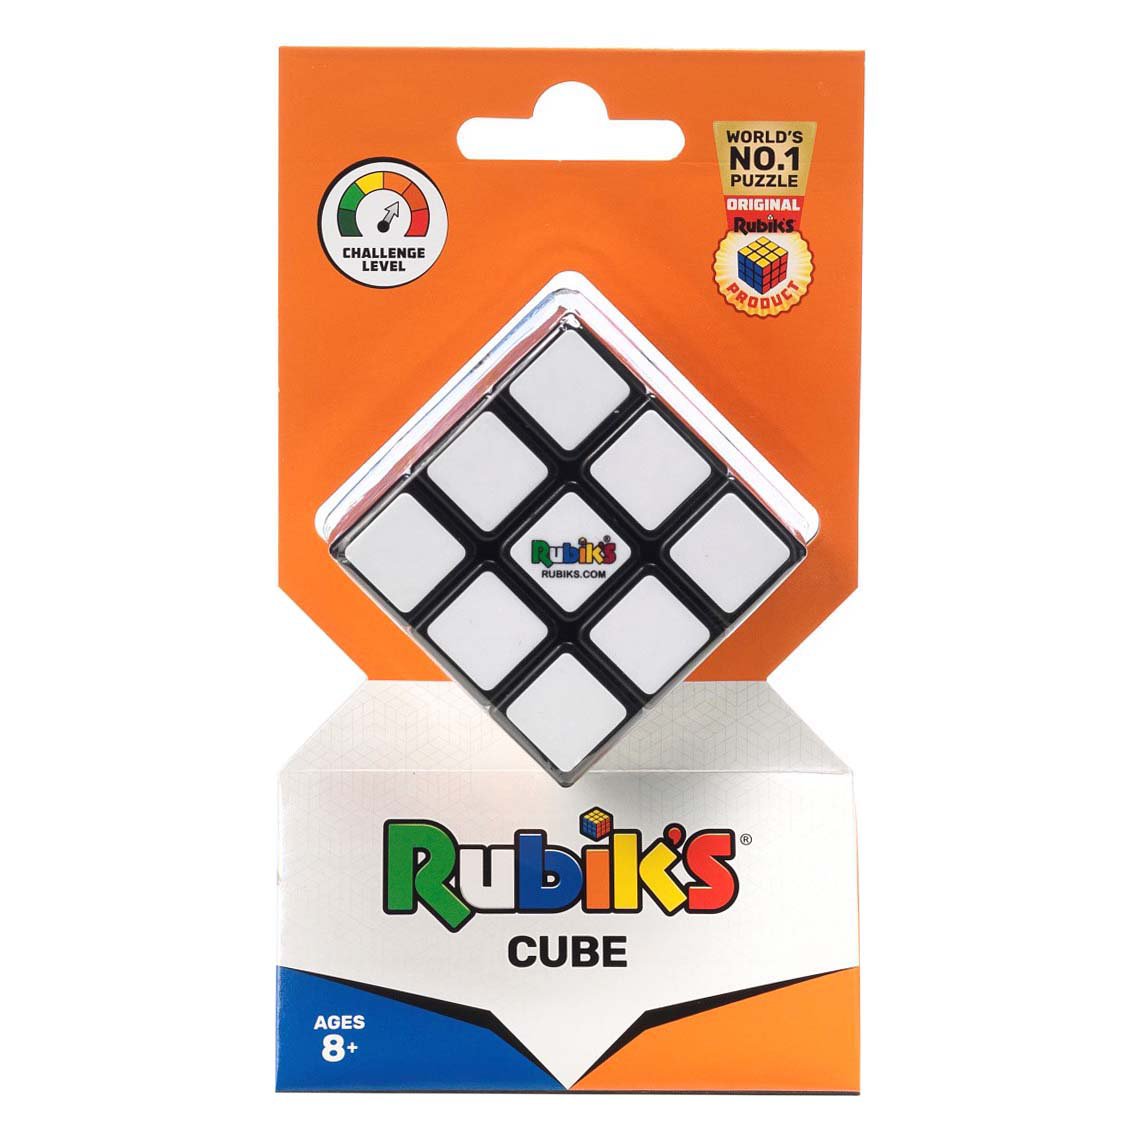 ORIGINAL Rubiks Cube 3x3 new rubics rubix puzzle brain teaser 